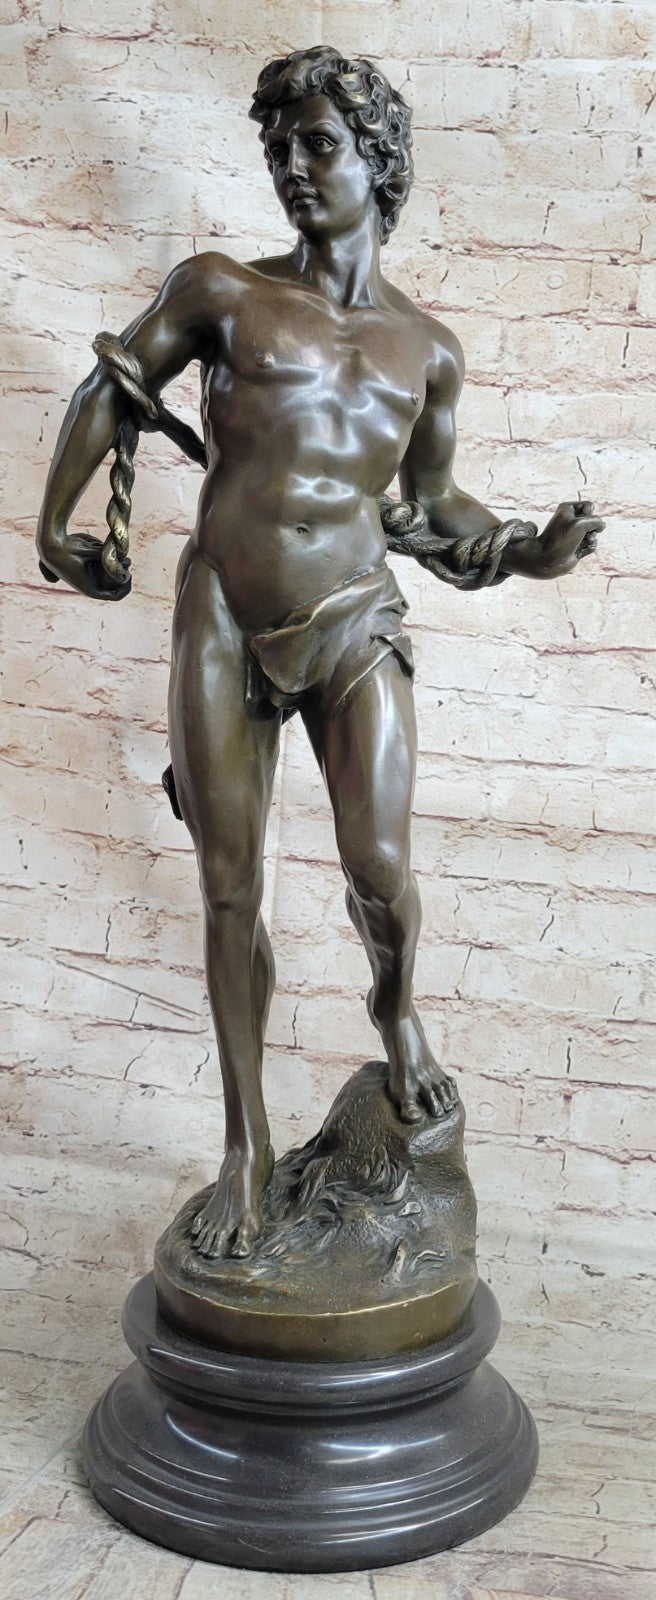 26" Museum Quality Extra Large David Nude Naked Erotic Art Bronze Sculpture Art